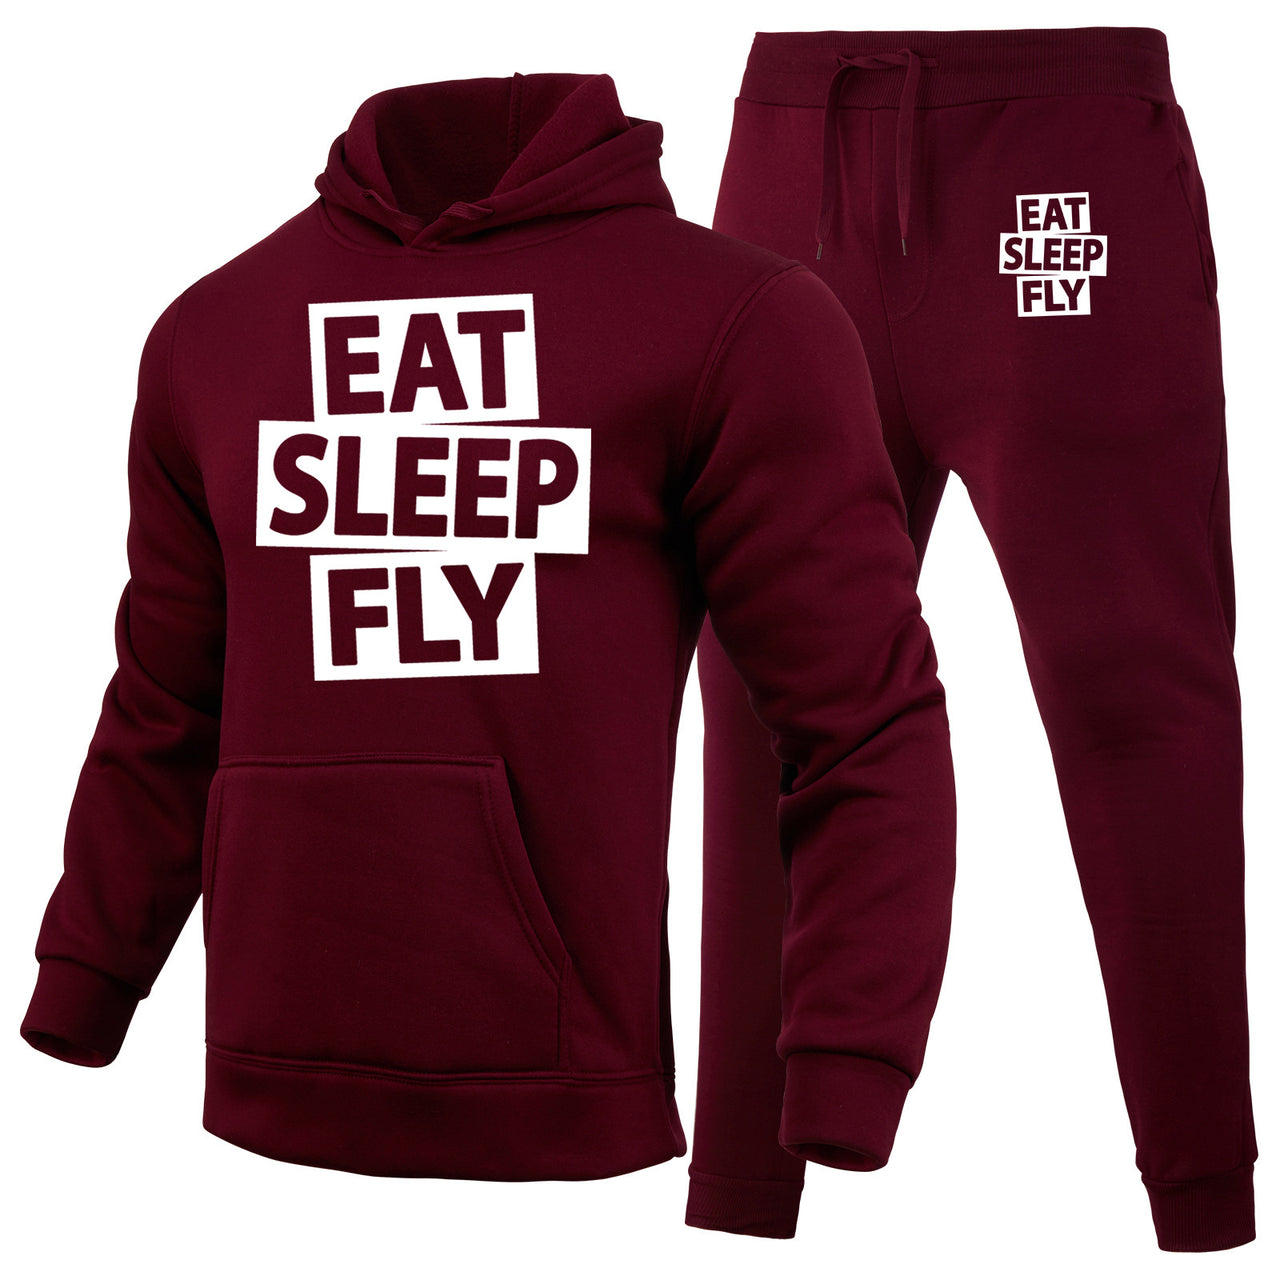 Eat Sleep Fly Designed Hoodies & Sweatpants Set